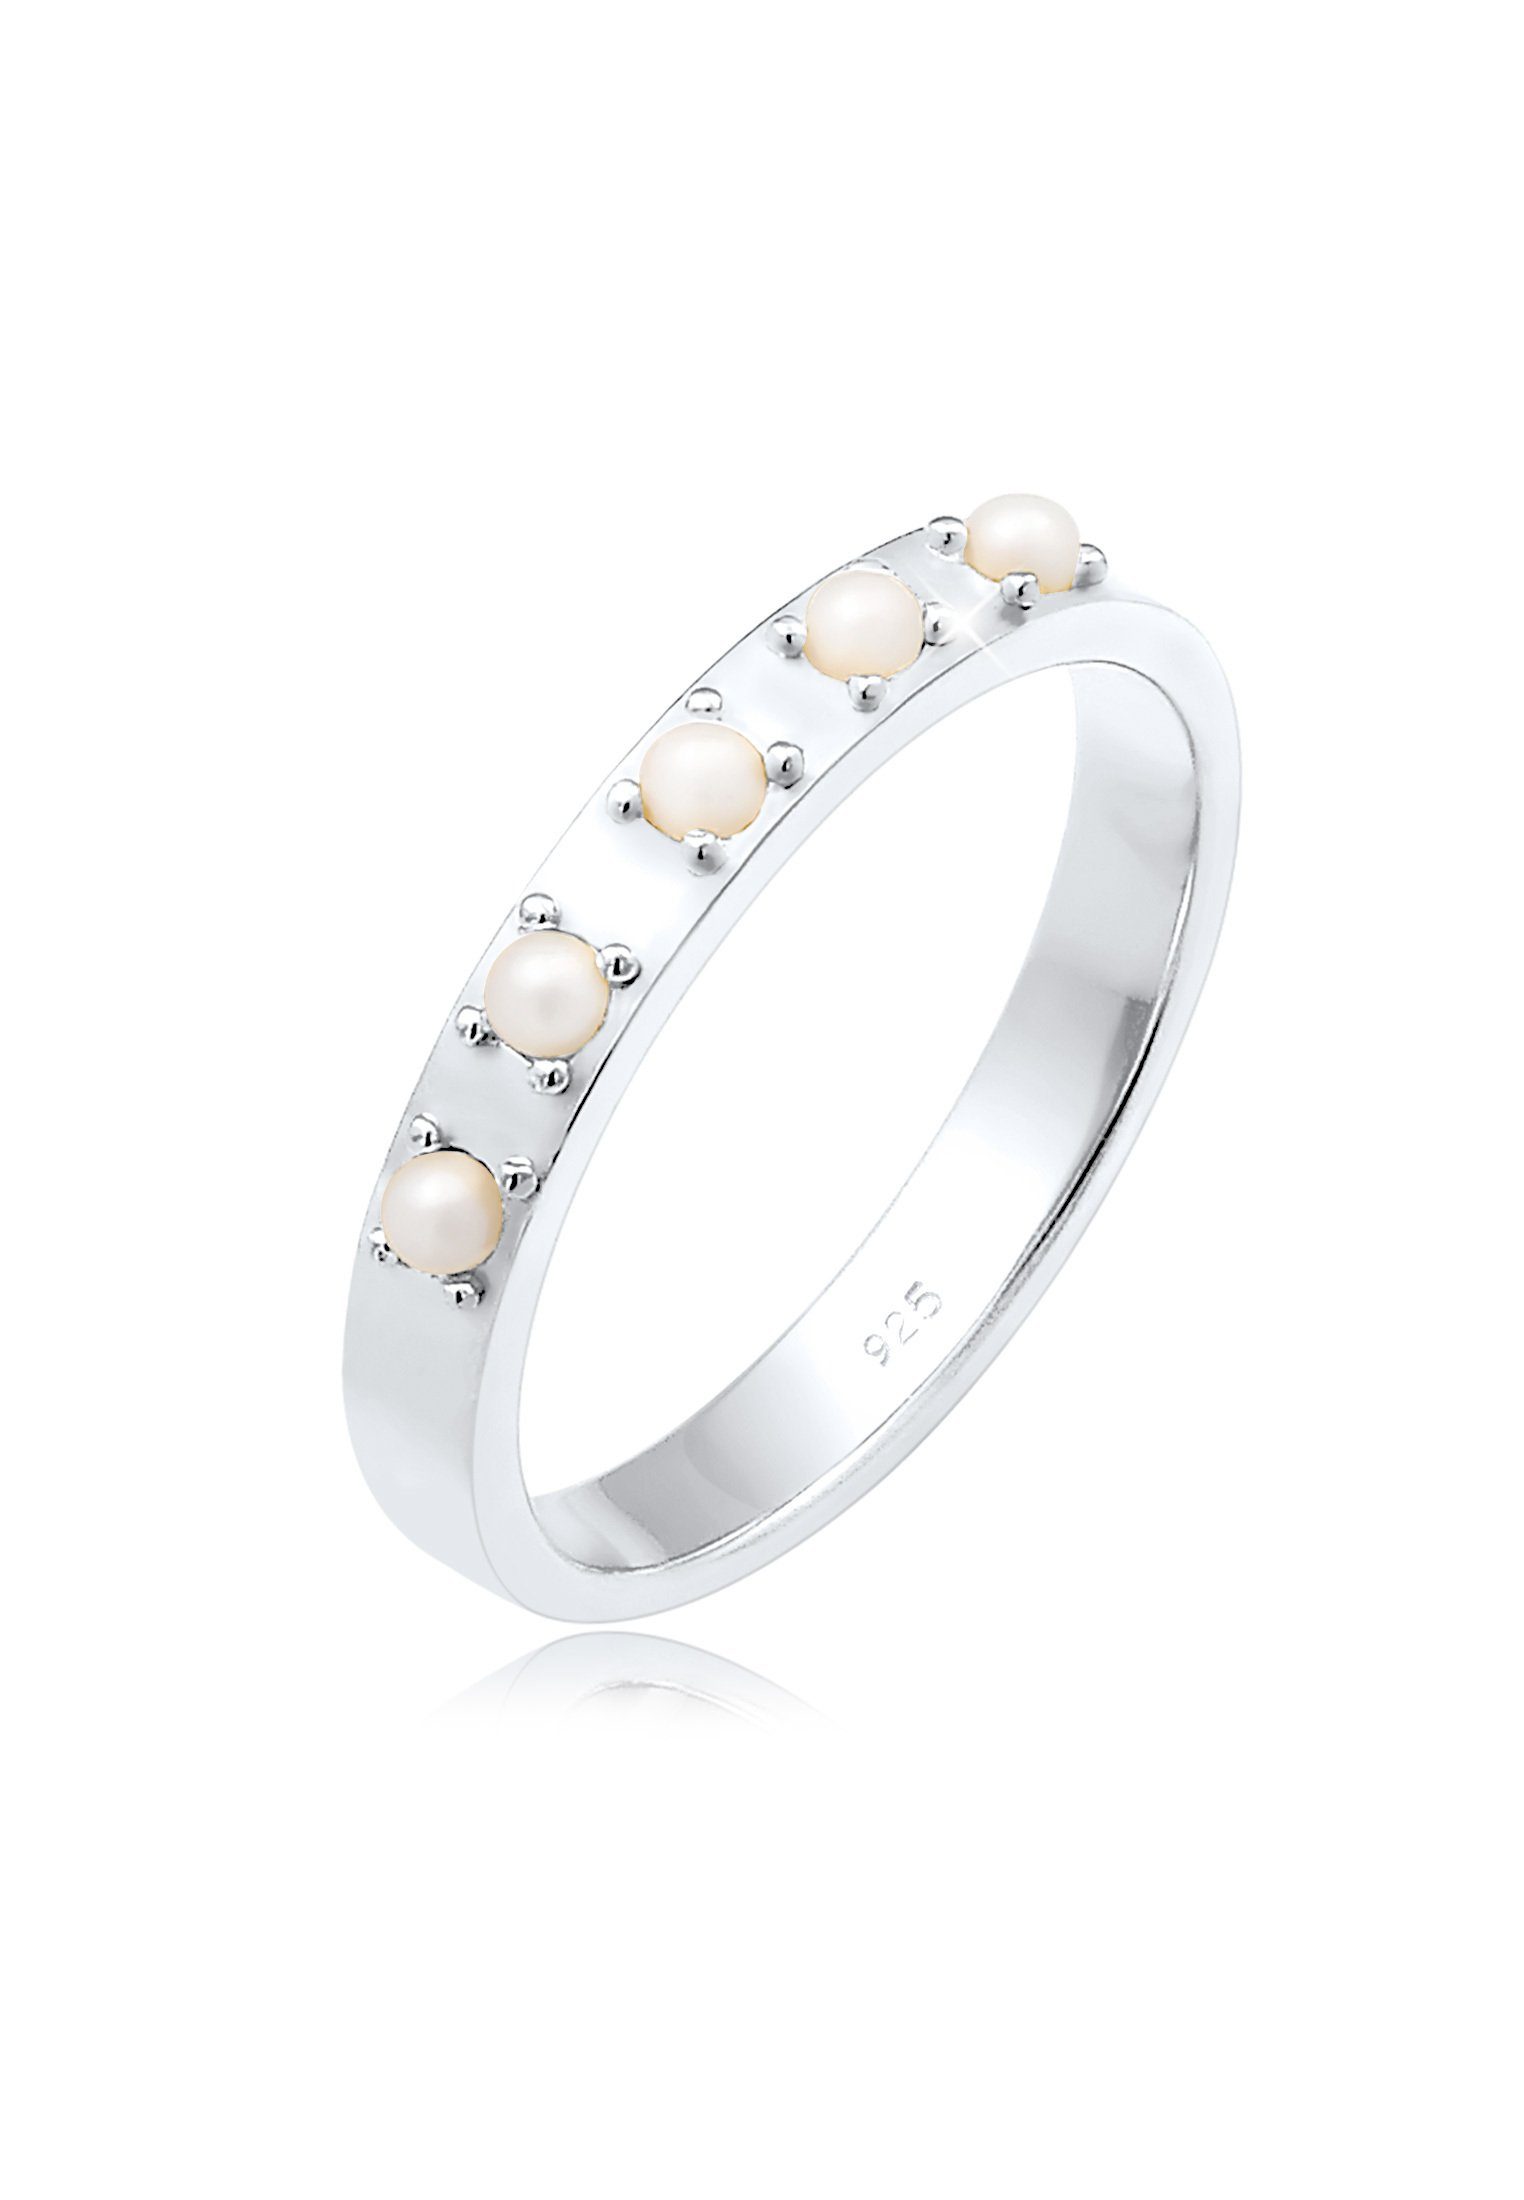 Synthetische anlaufgeschützt Bandring Silber, hochglanzpoliert Perlenring 925 Silberschmuck Elli und Perlen